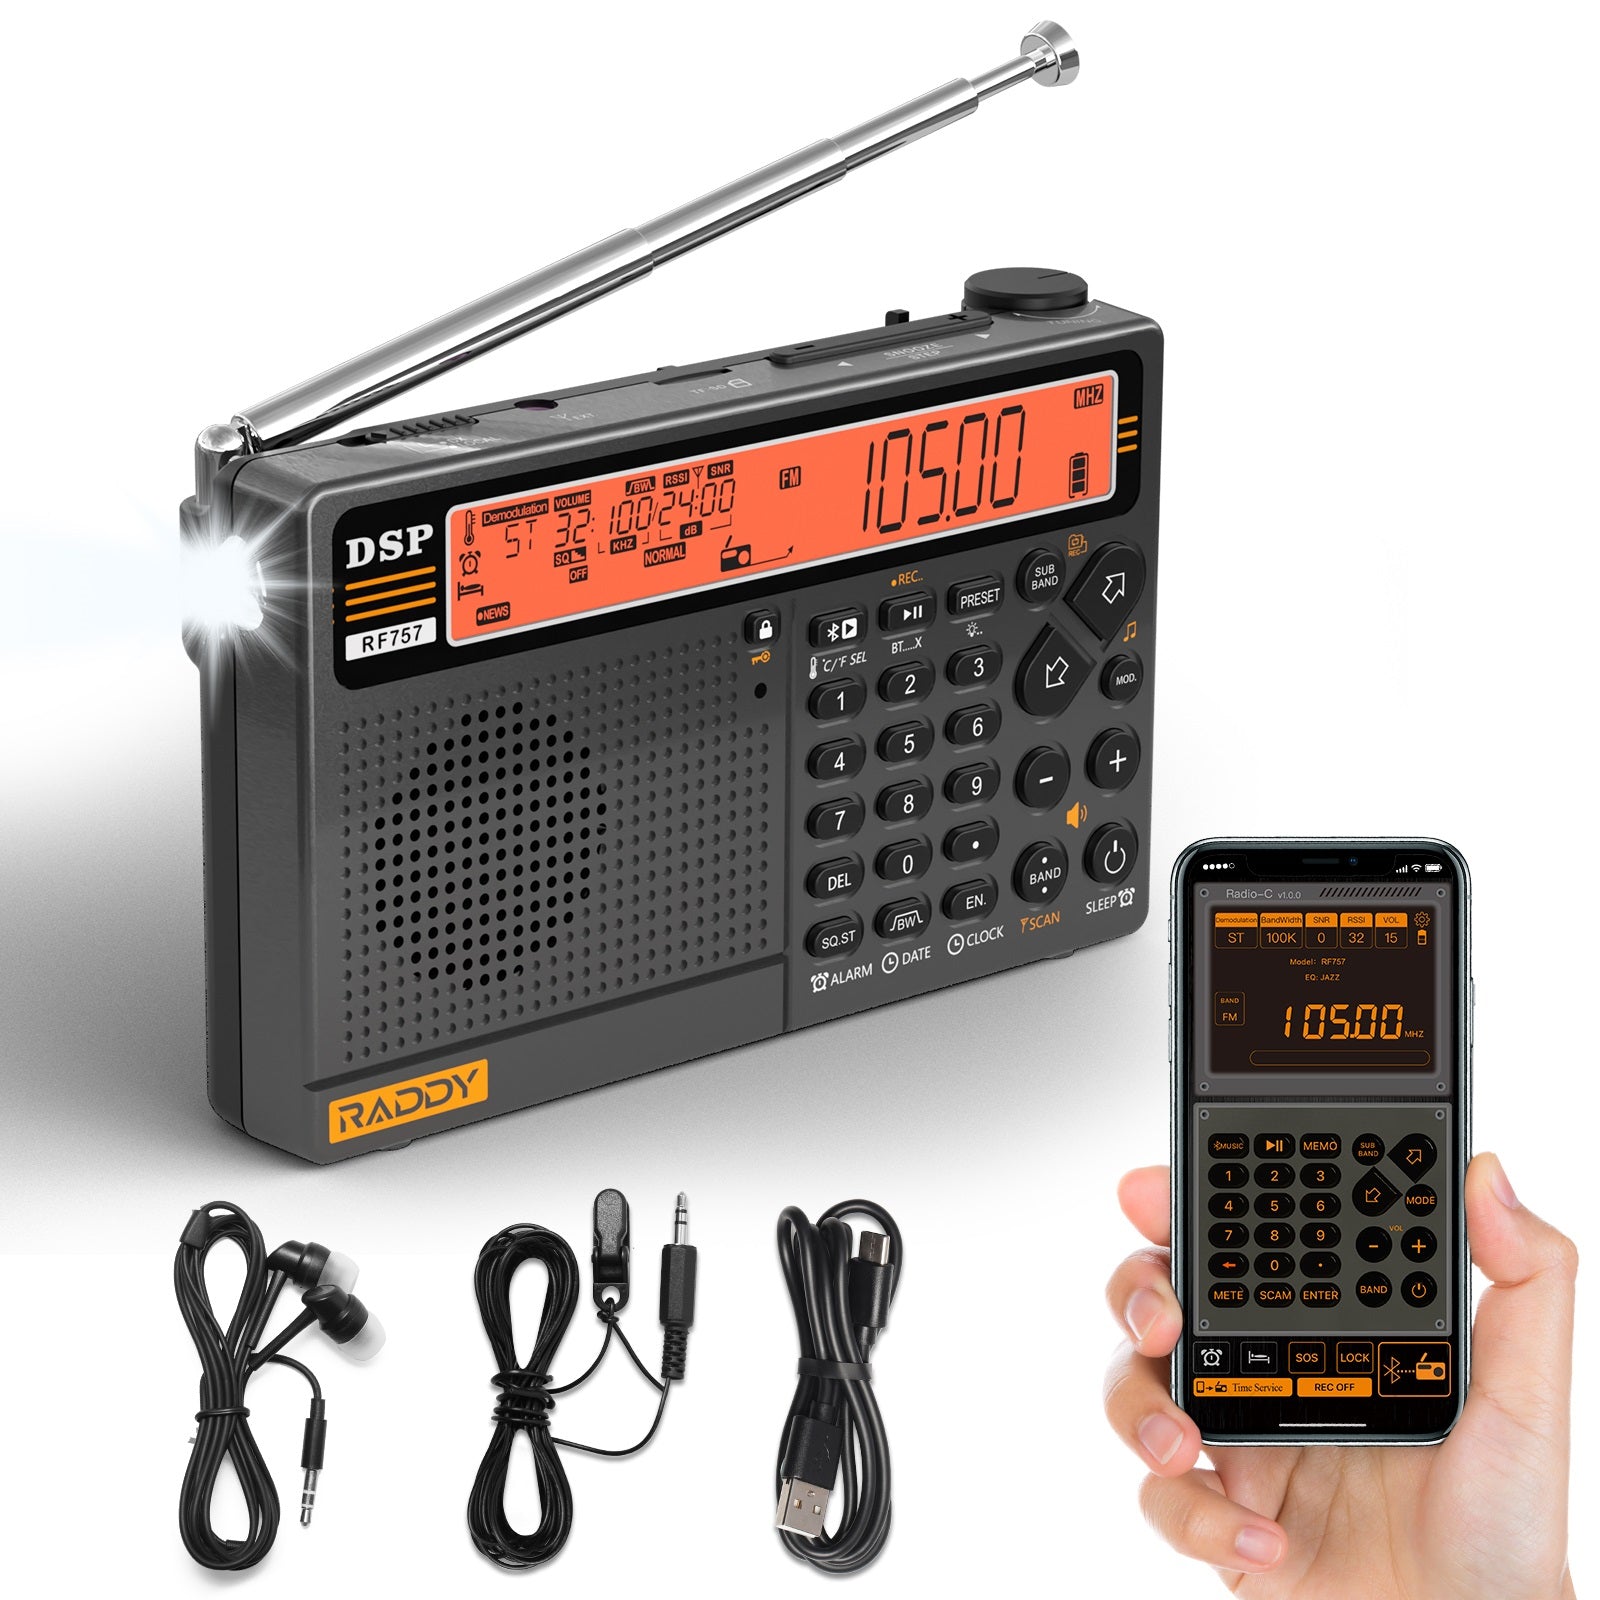 RF757 Shortwave Radio